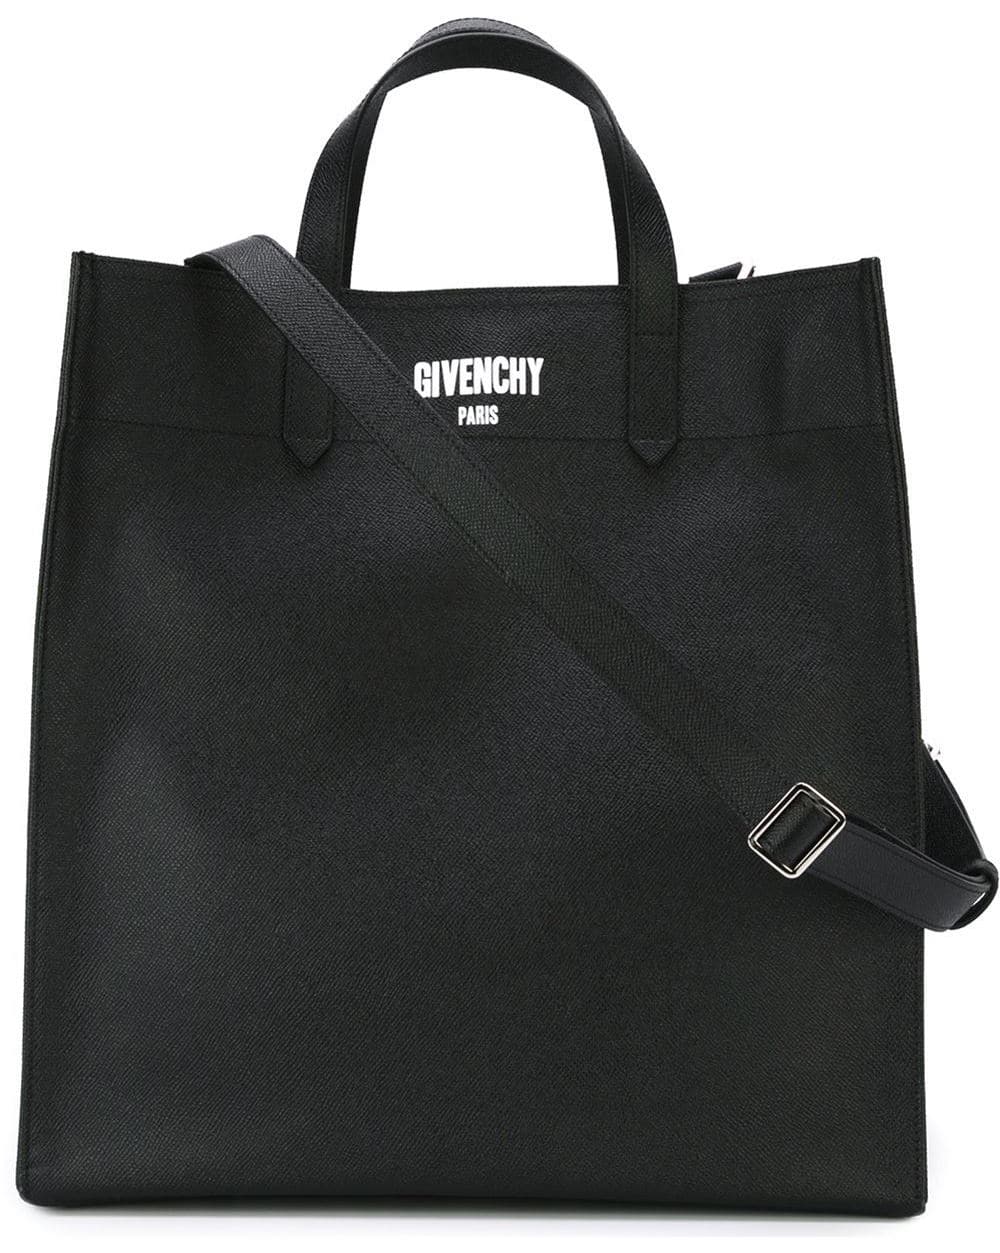 Givenchy Paris Shopper Tote Bag